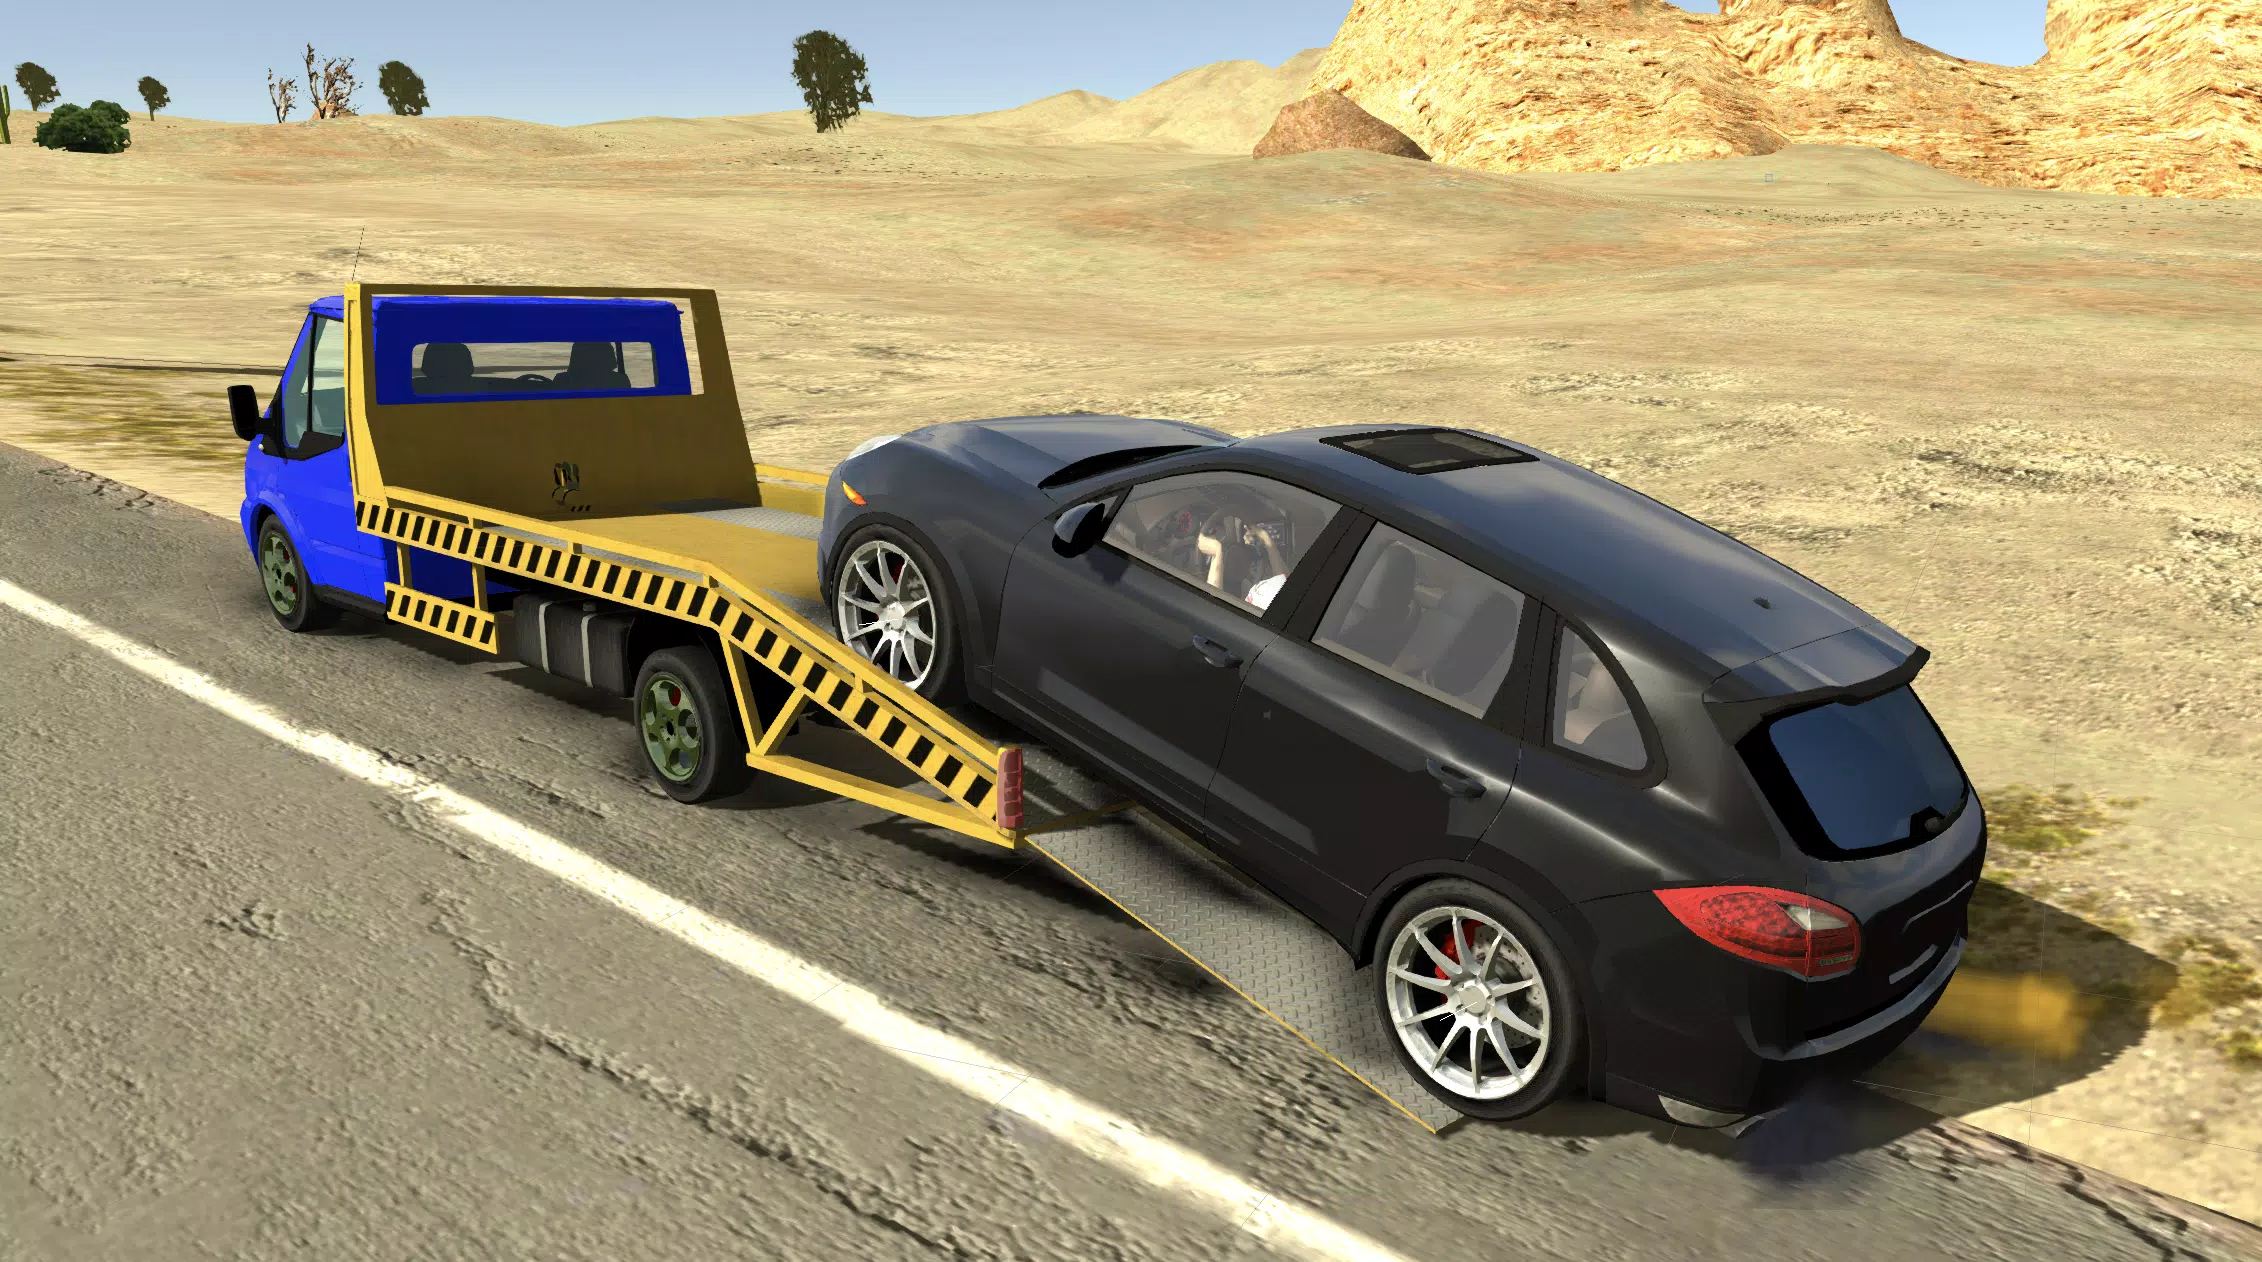 manual car driving simulator game for android